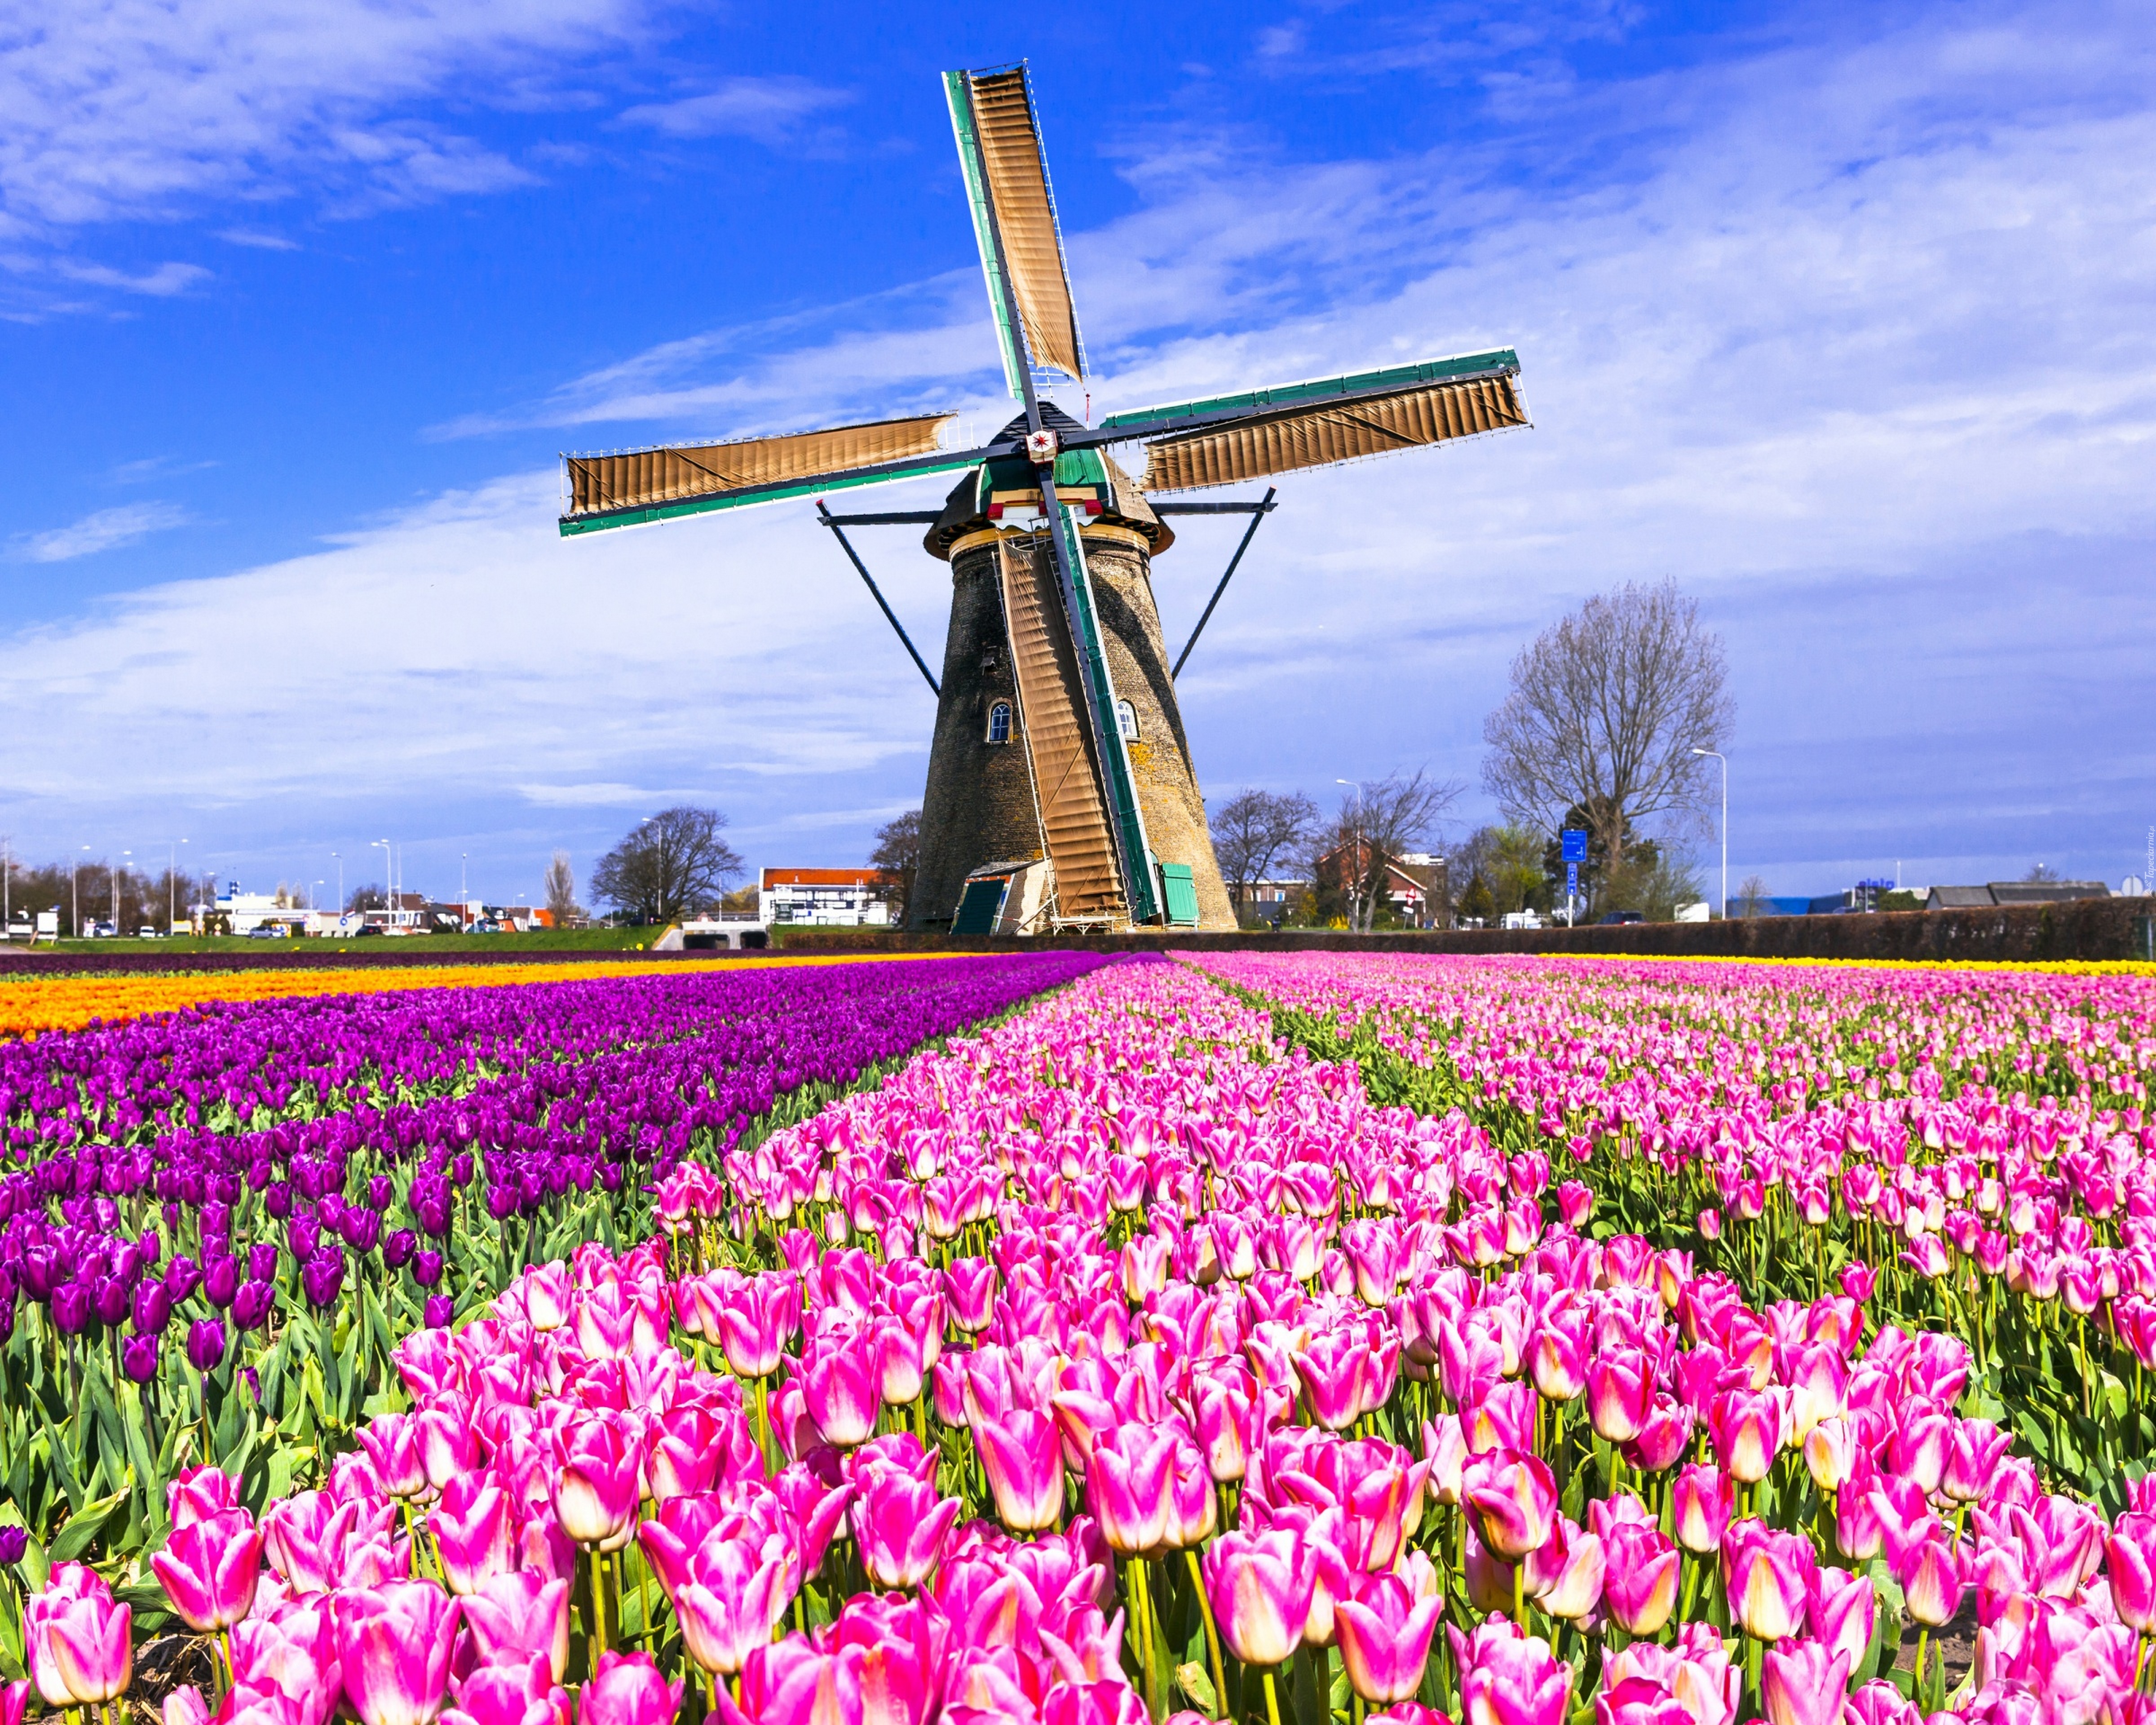 Pole, Tulipanów, Wiatrak, Holandia